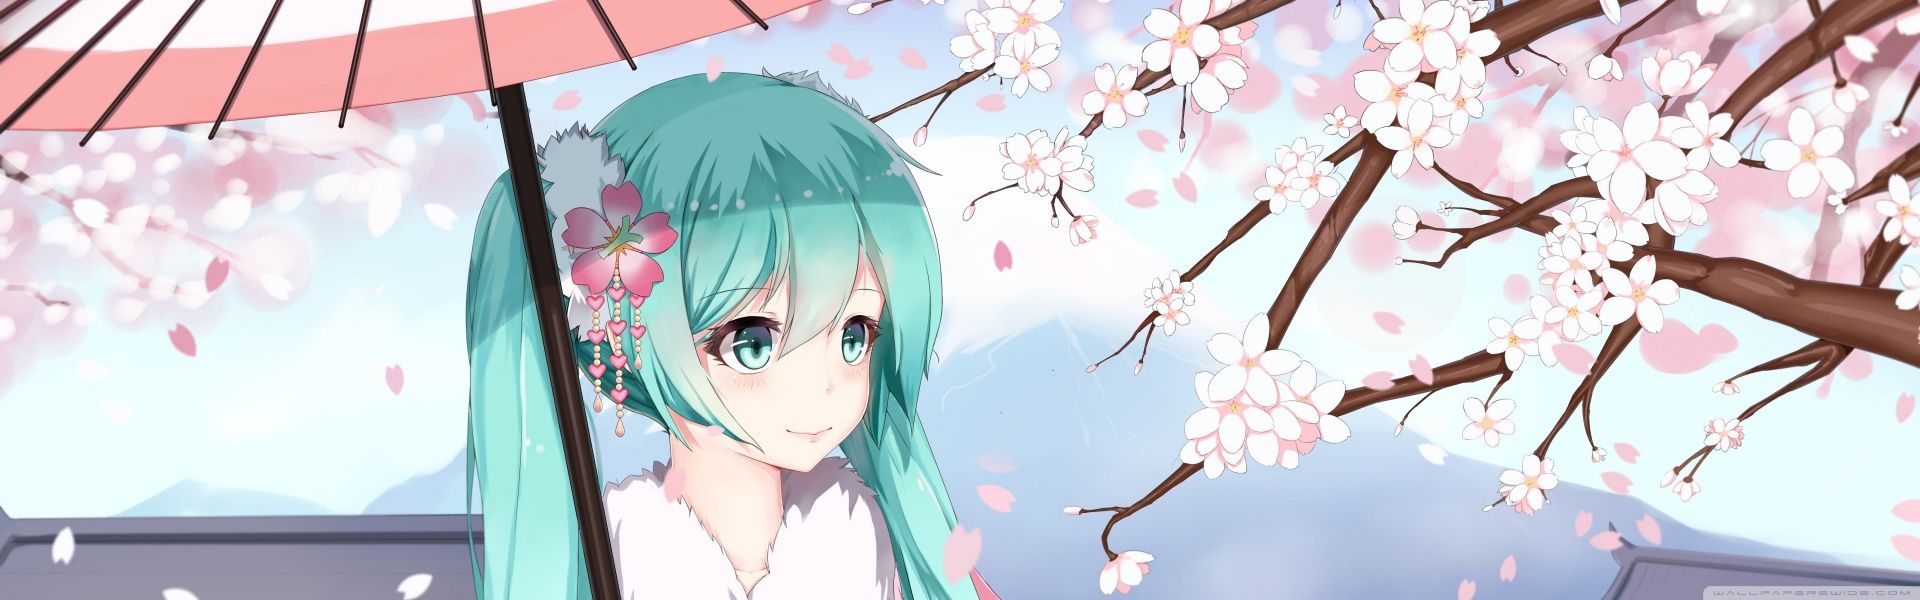 Hatsune Miku Sakura Ultra HD Desktop Background Wallpaper for 4K